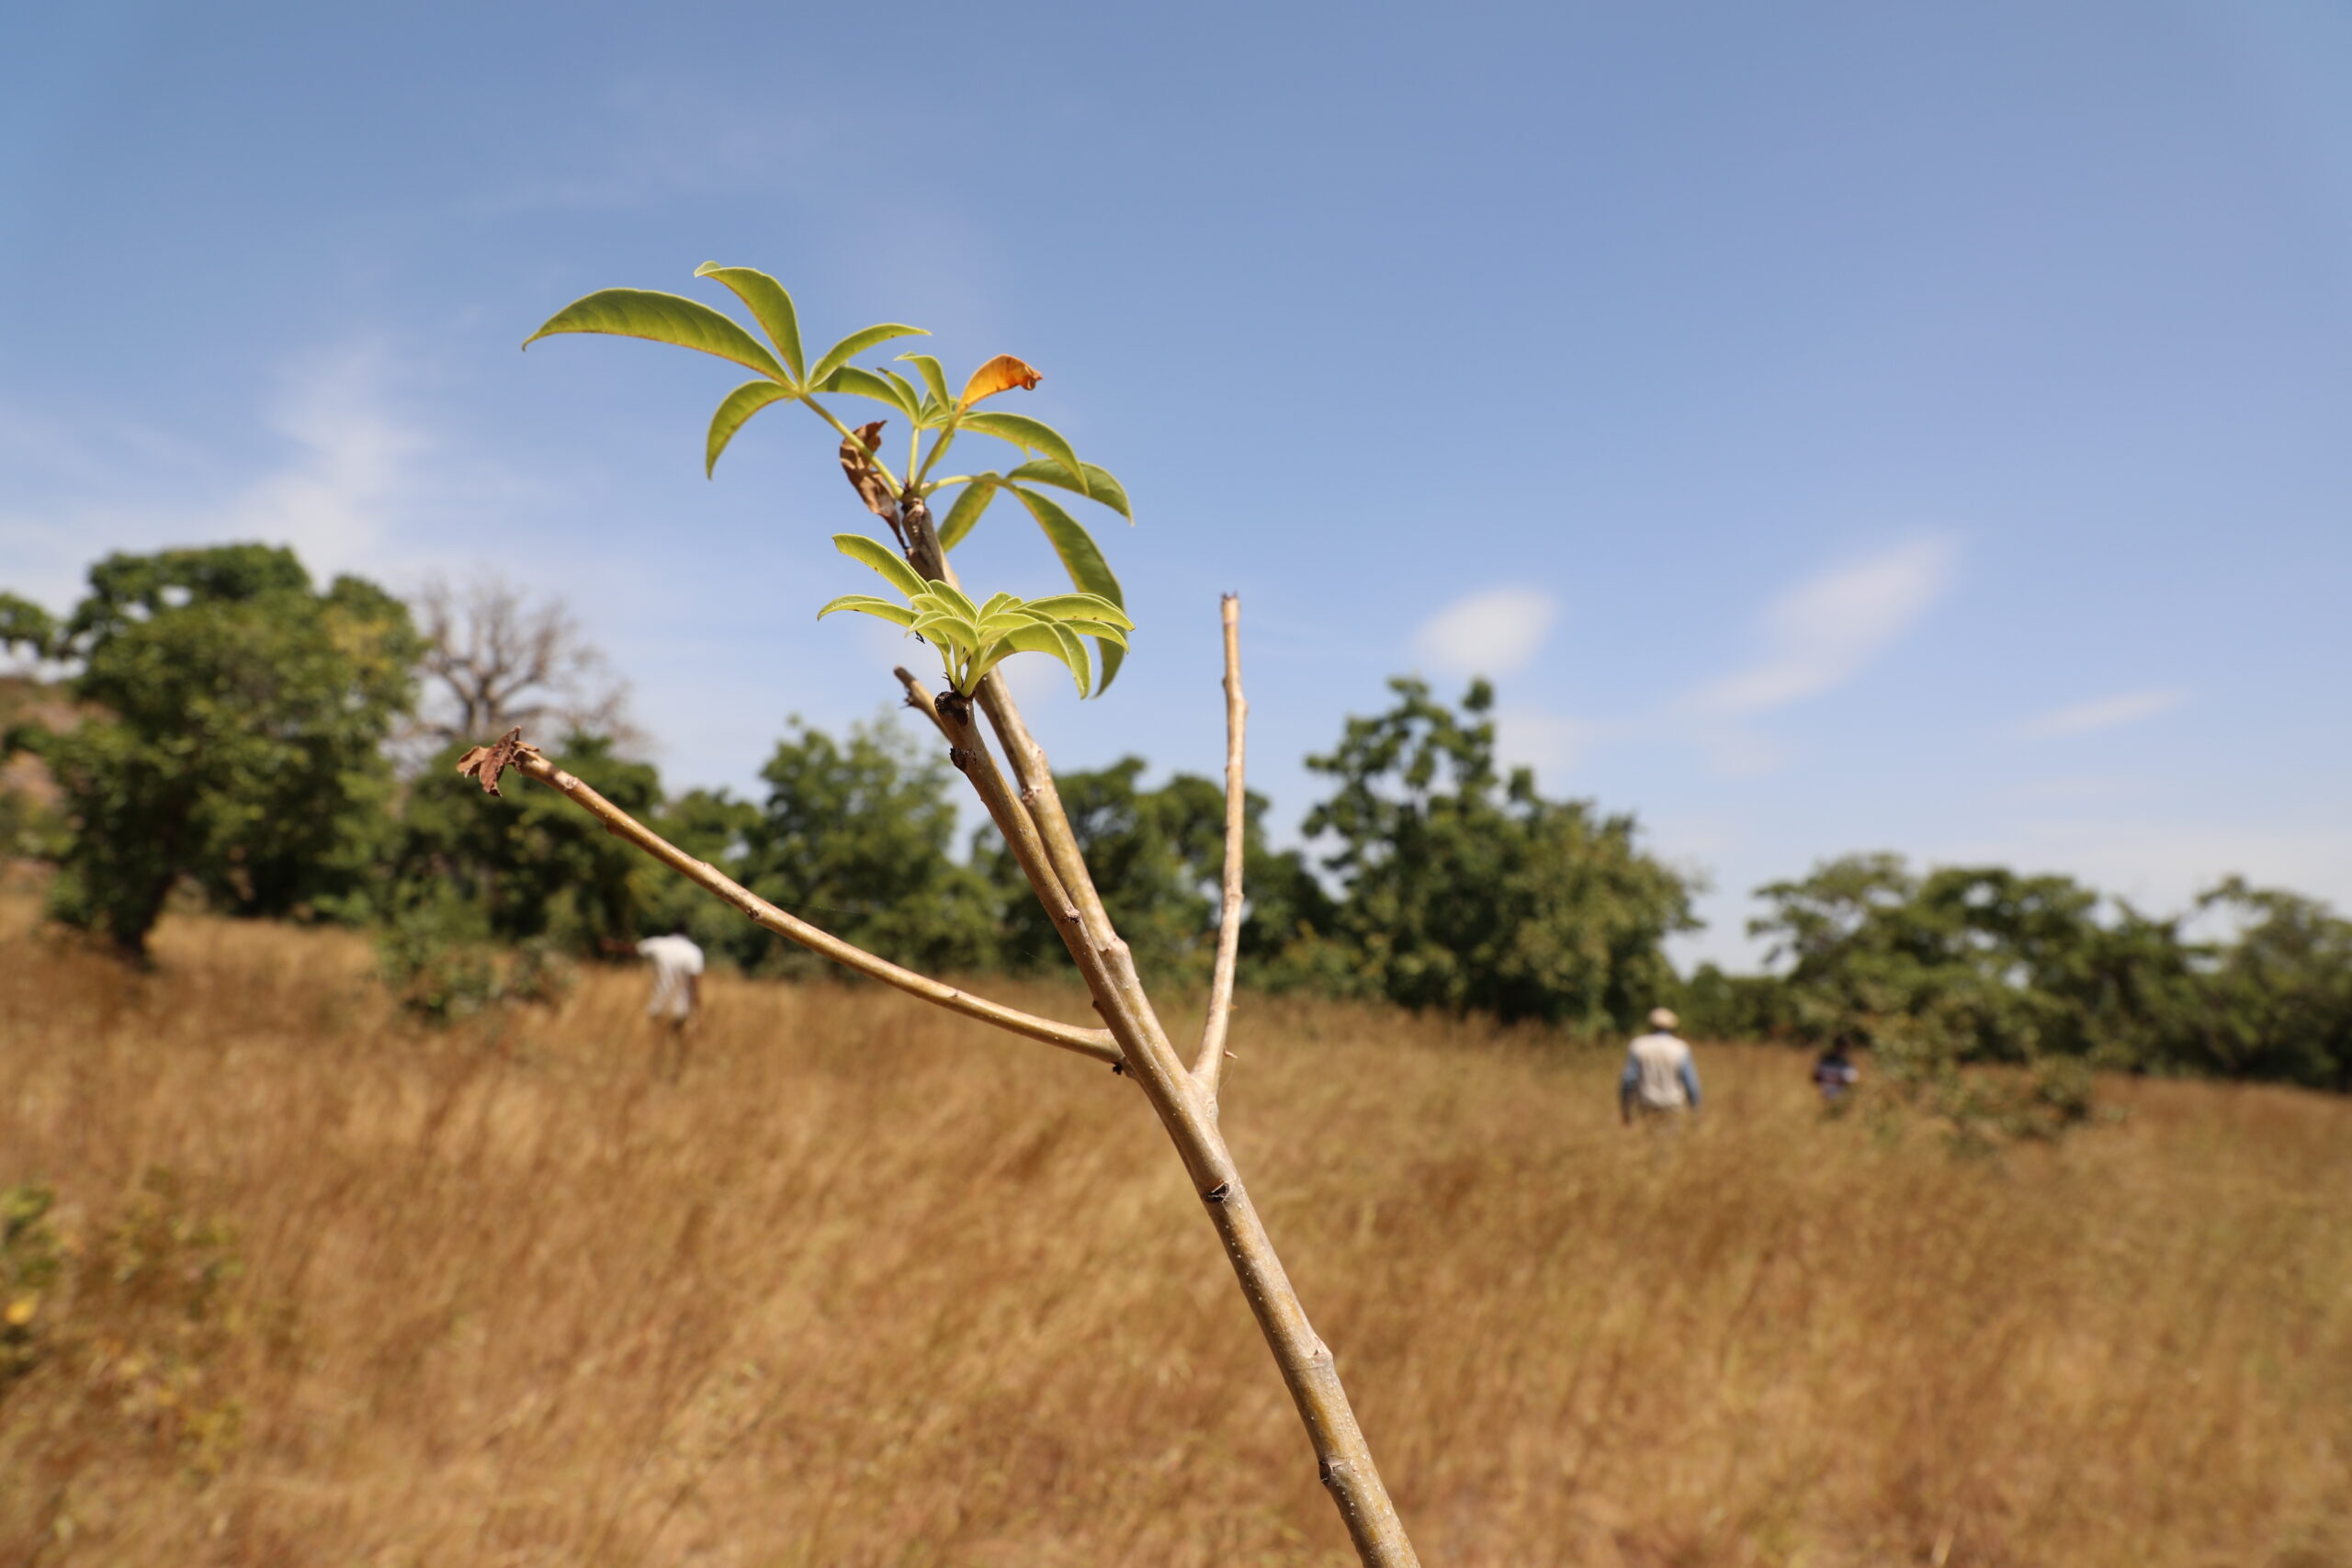 Baobab tree transplant at Kanania Community